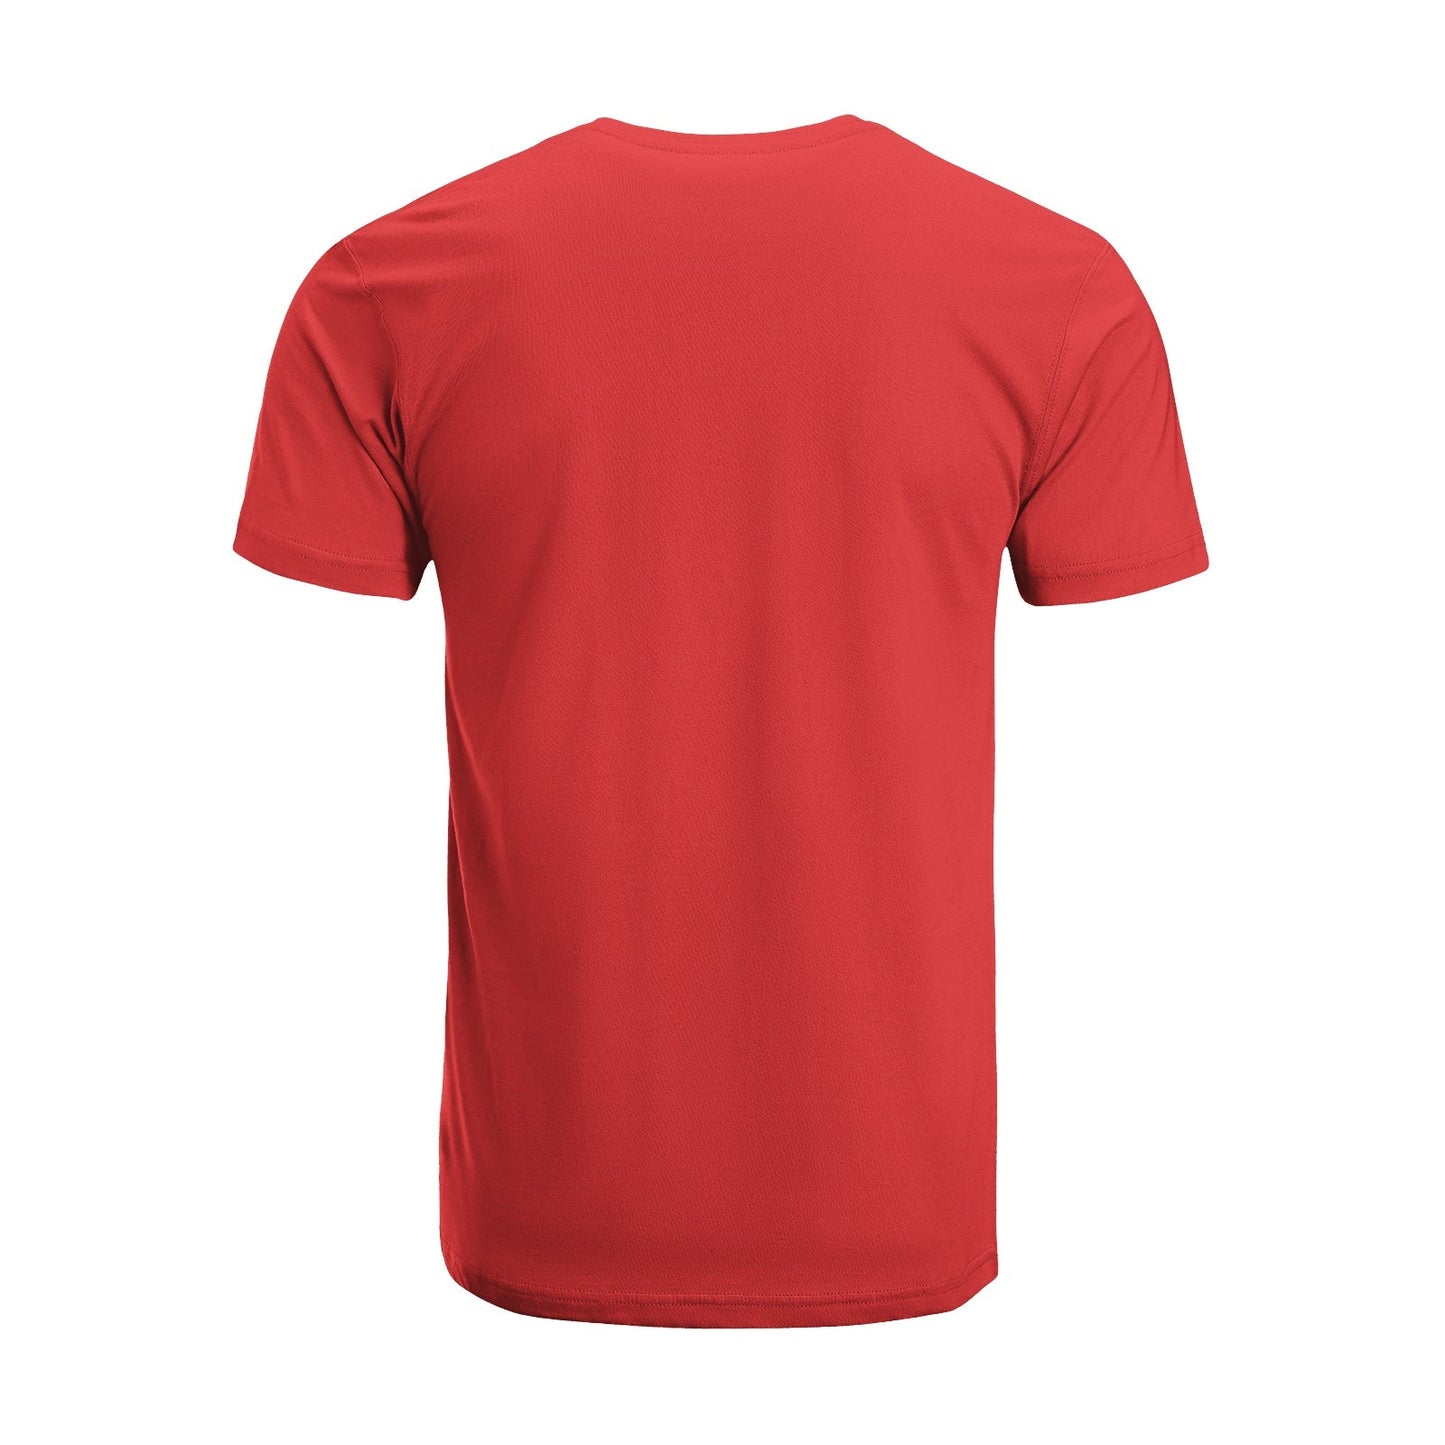 Unisex Short Sleeve Crew Neck Cotton Jersey T-Shirt VEGAN 22